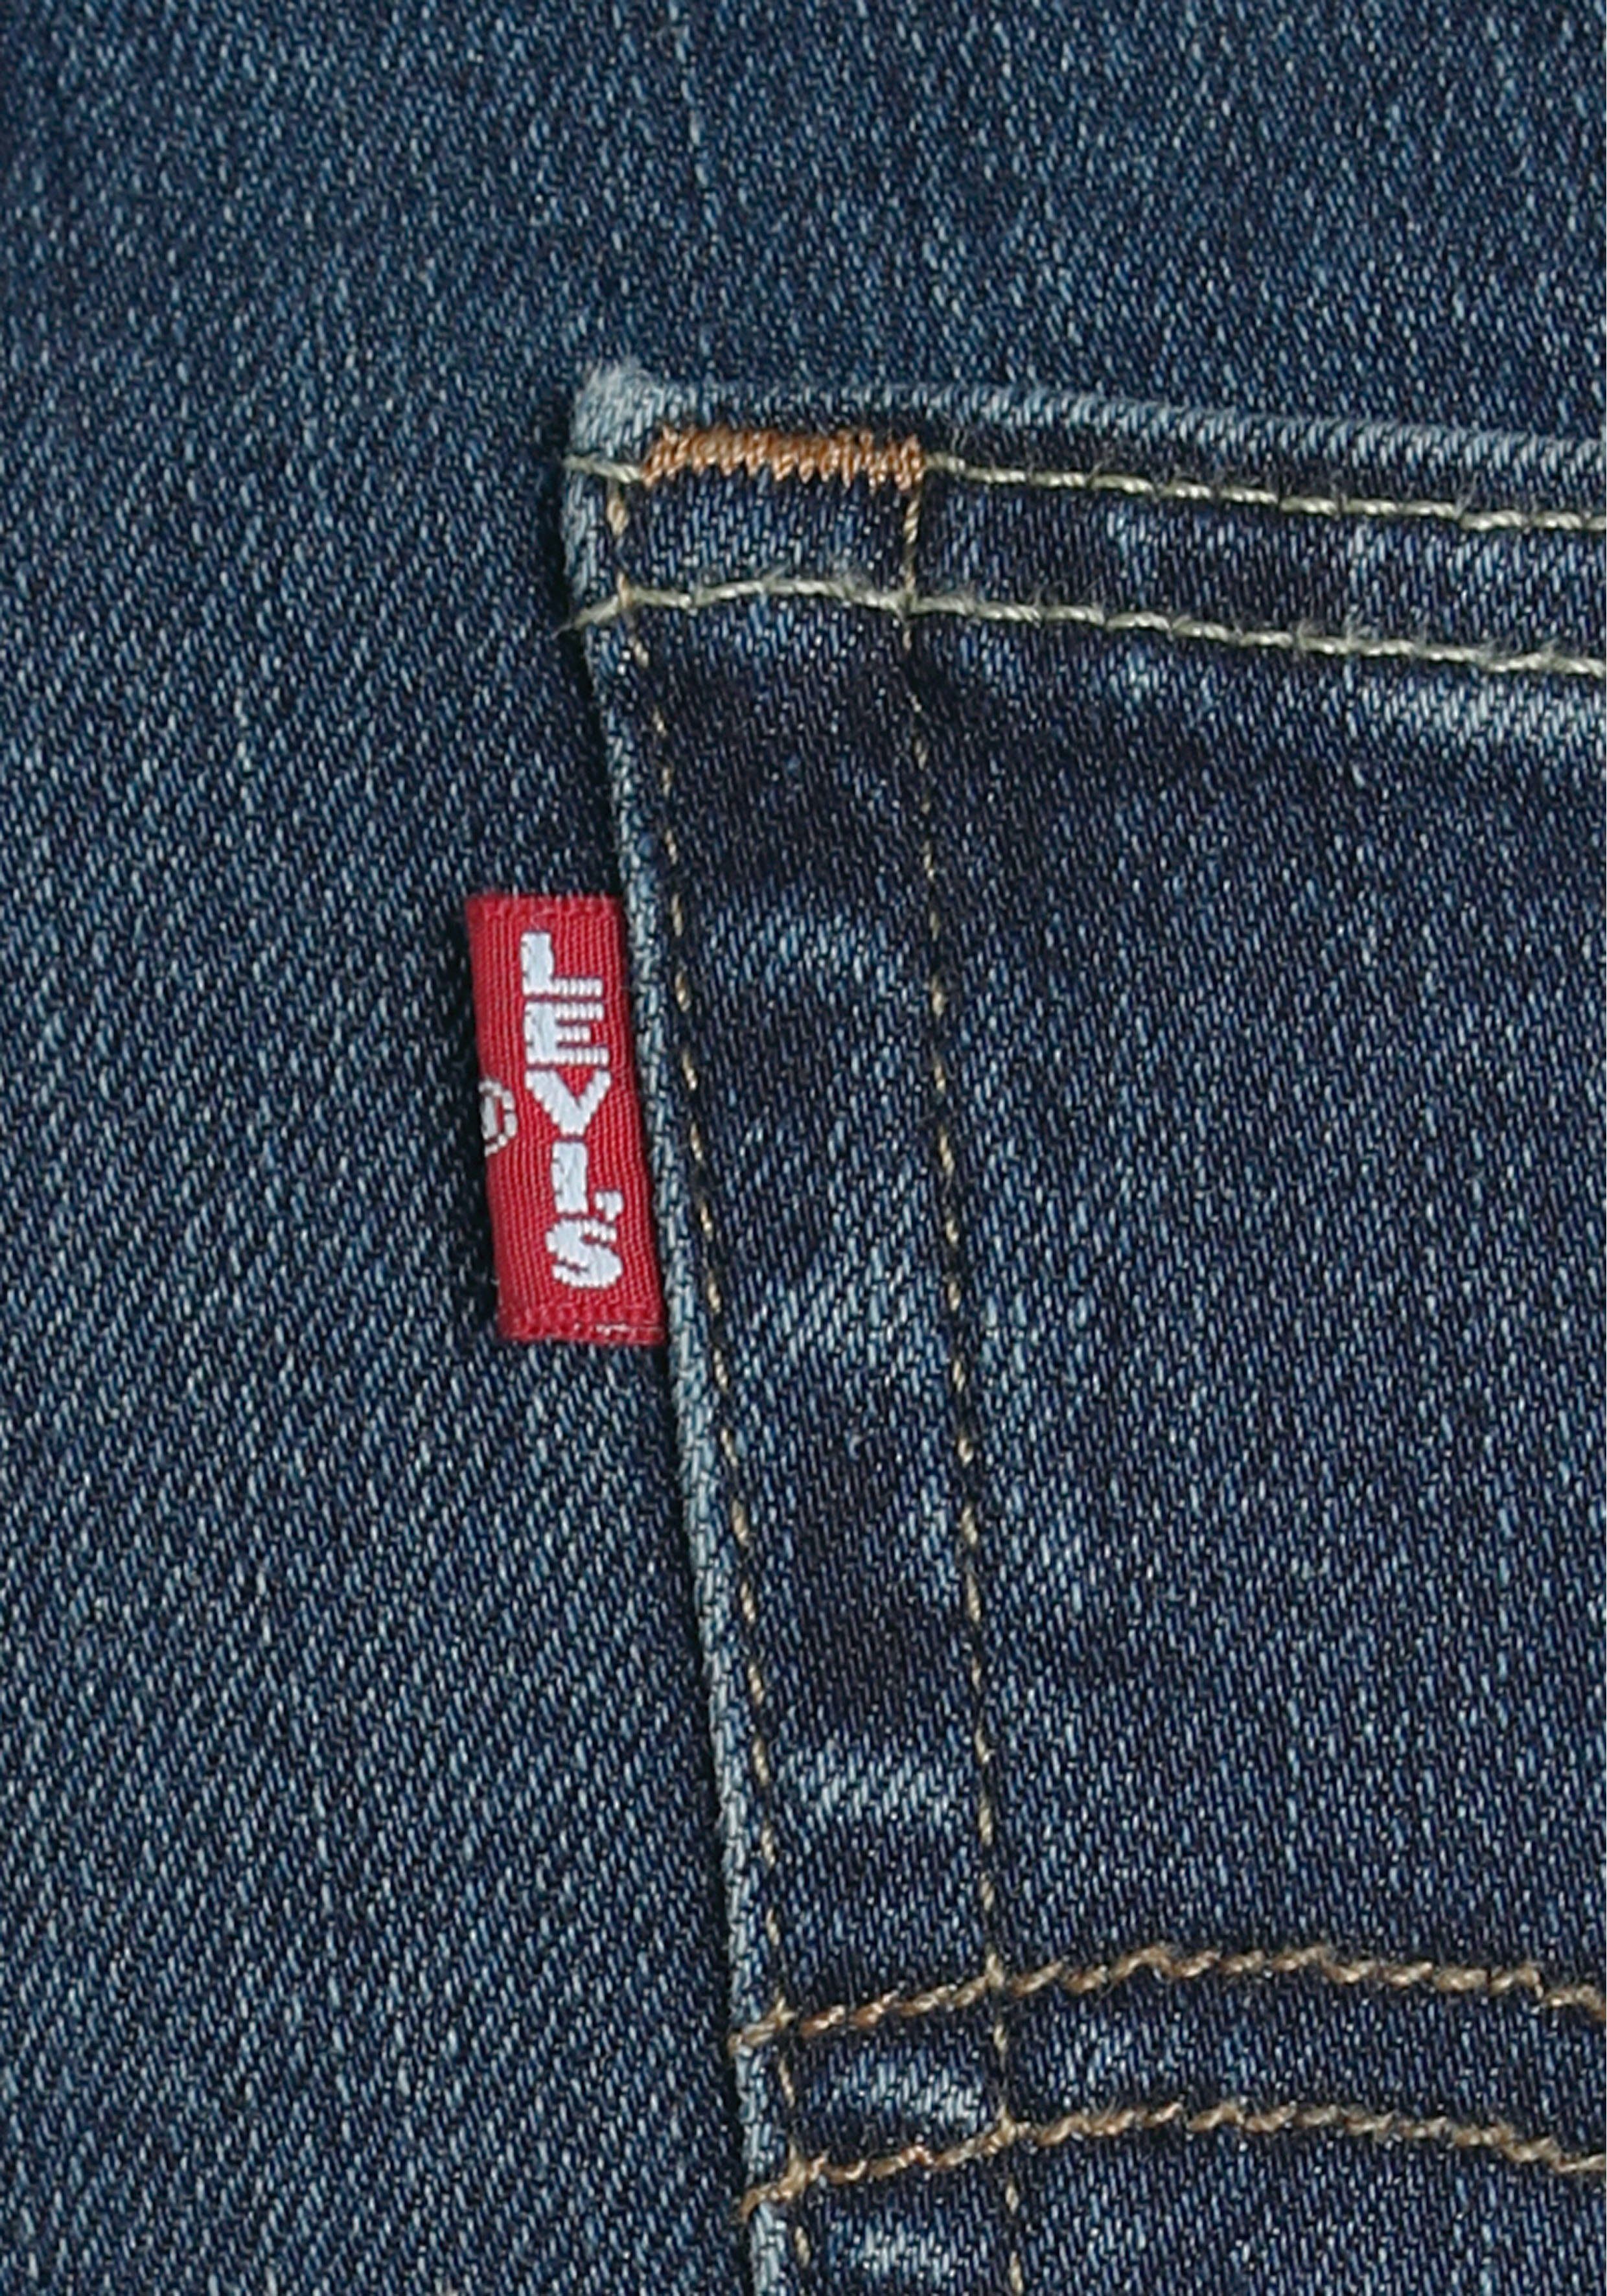 Levi's® Skinny-fit-Jeans in dark worn Bund indigo High mit 721 rise skinny hohem